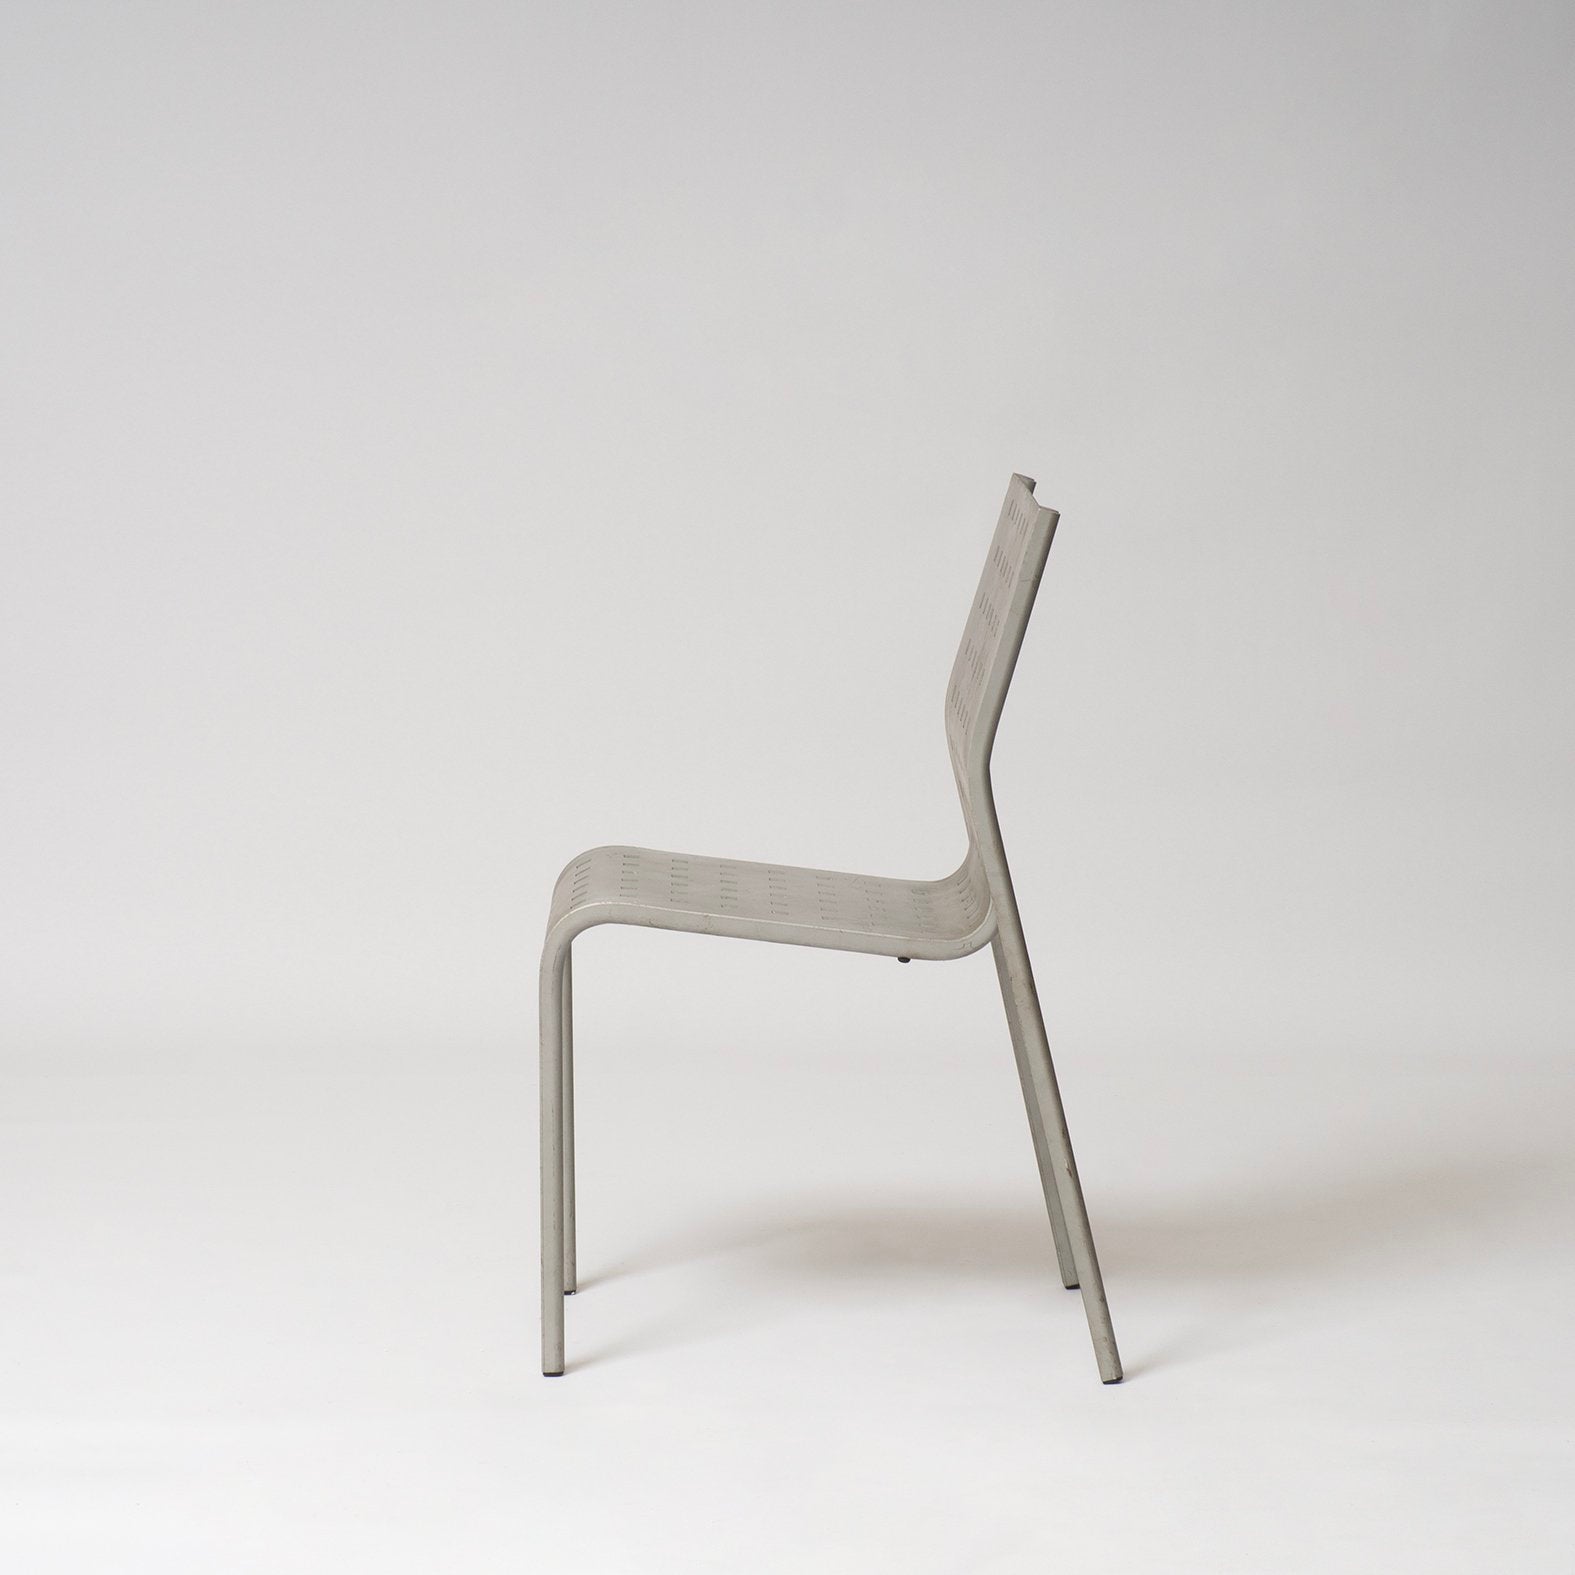 No. 2068 Mirandolina Chairs by Pietro Arosio for Zanotta